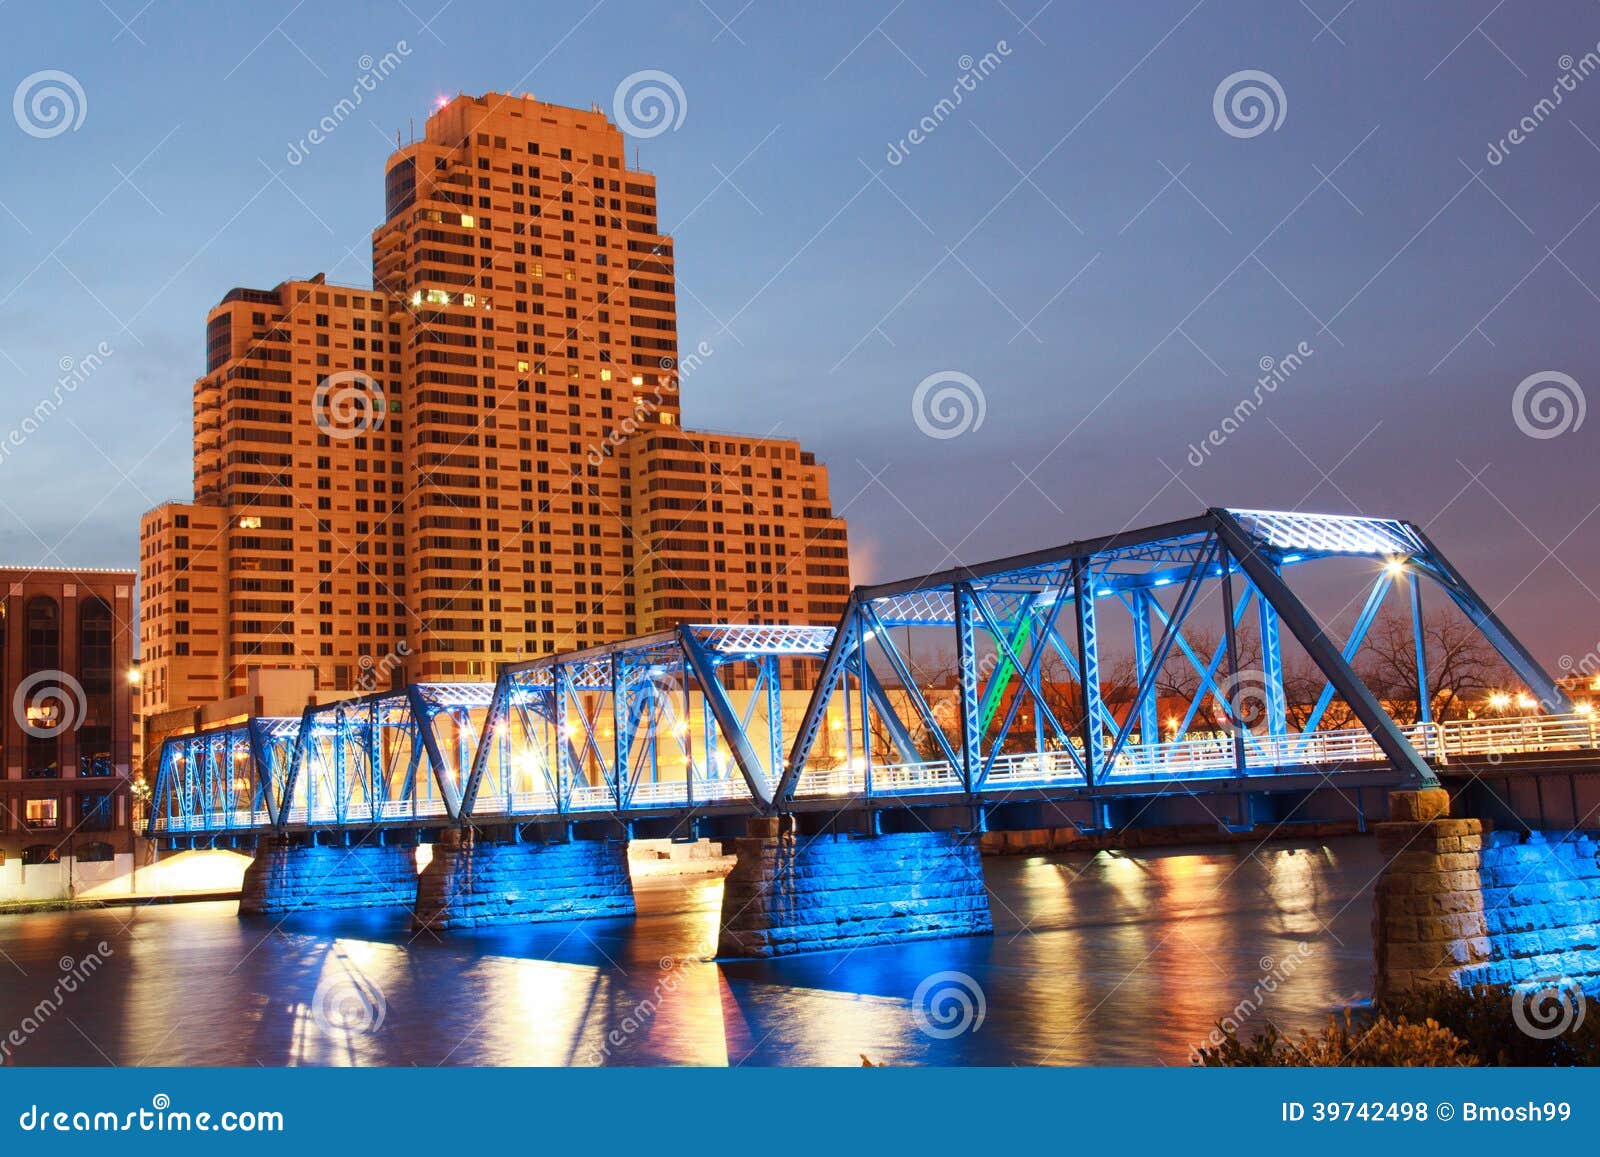 blue bridge in grand rapids